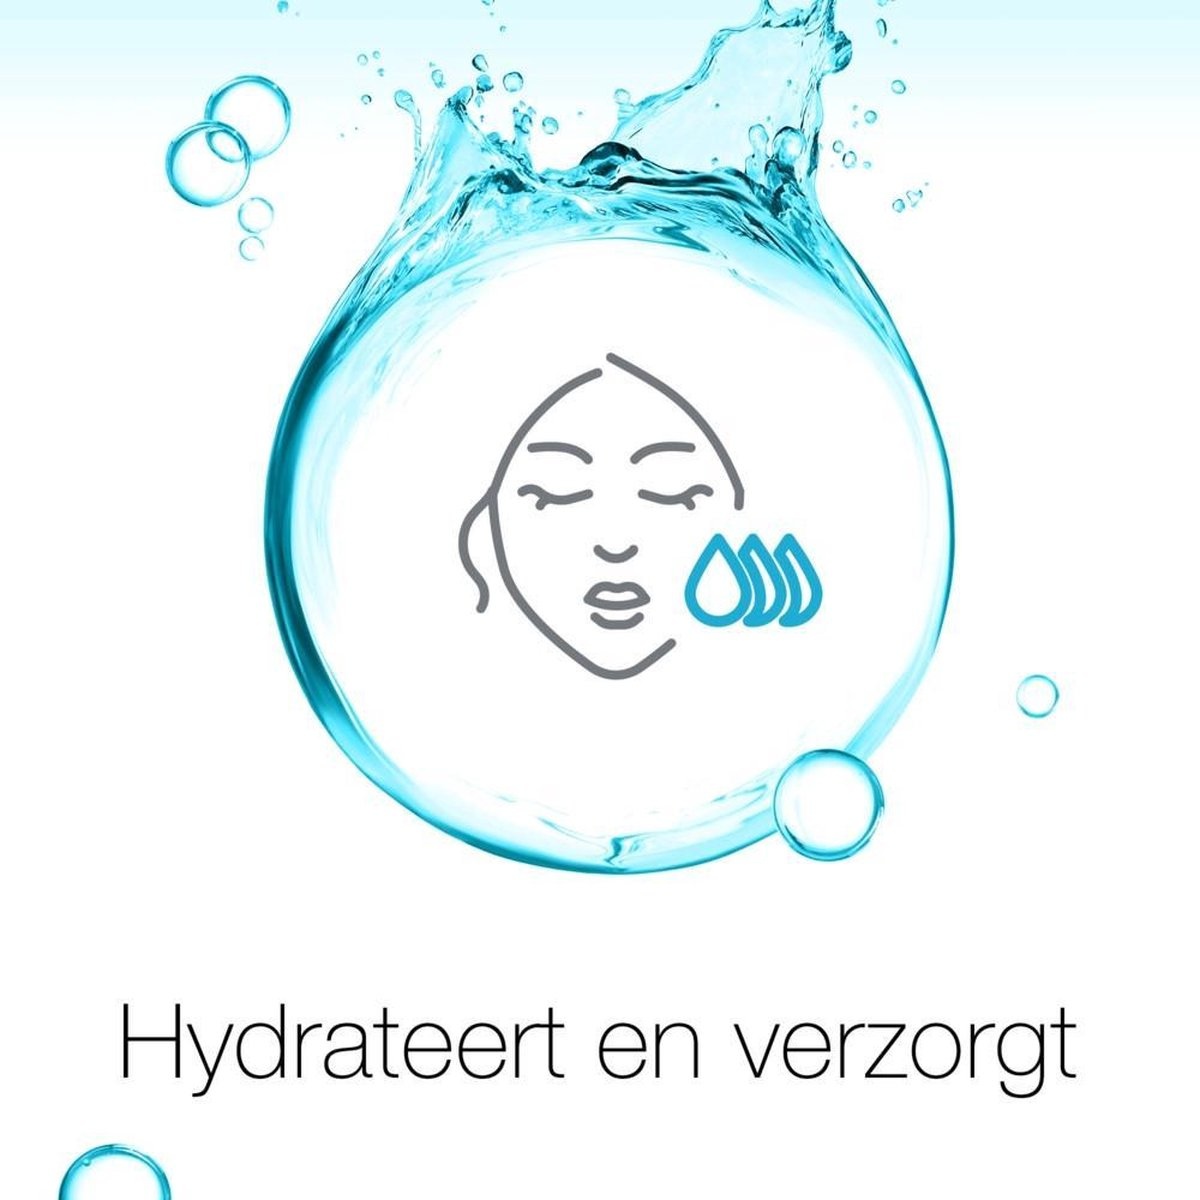 Neutrogena Hydro Boost Aqua Gel Normal & Combination Skin 50ml - Package Damaged